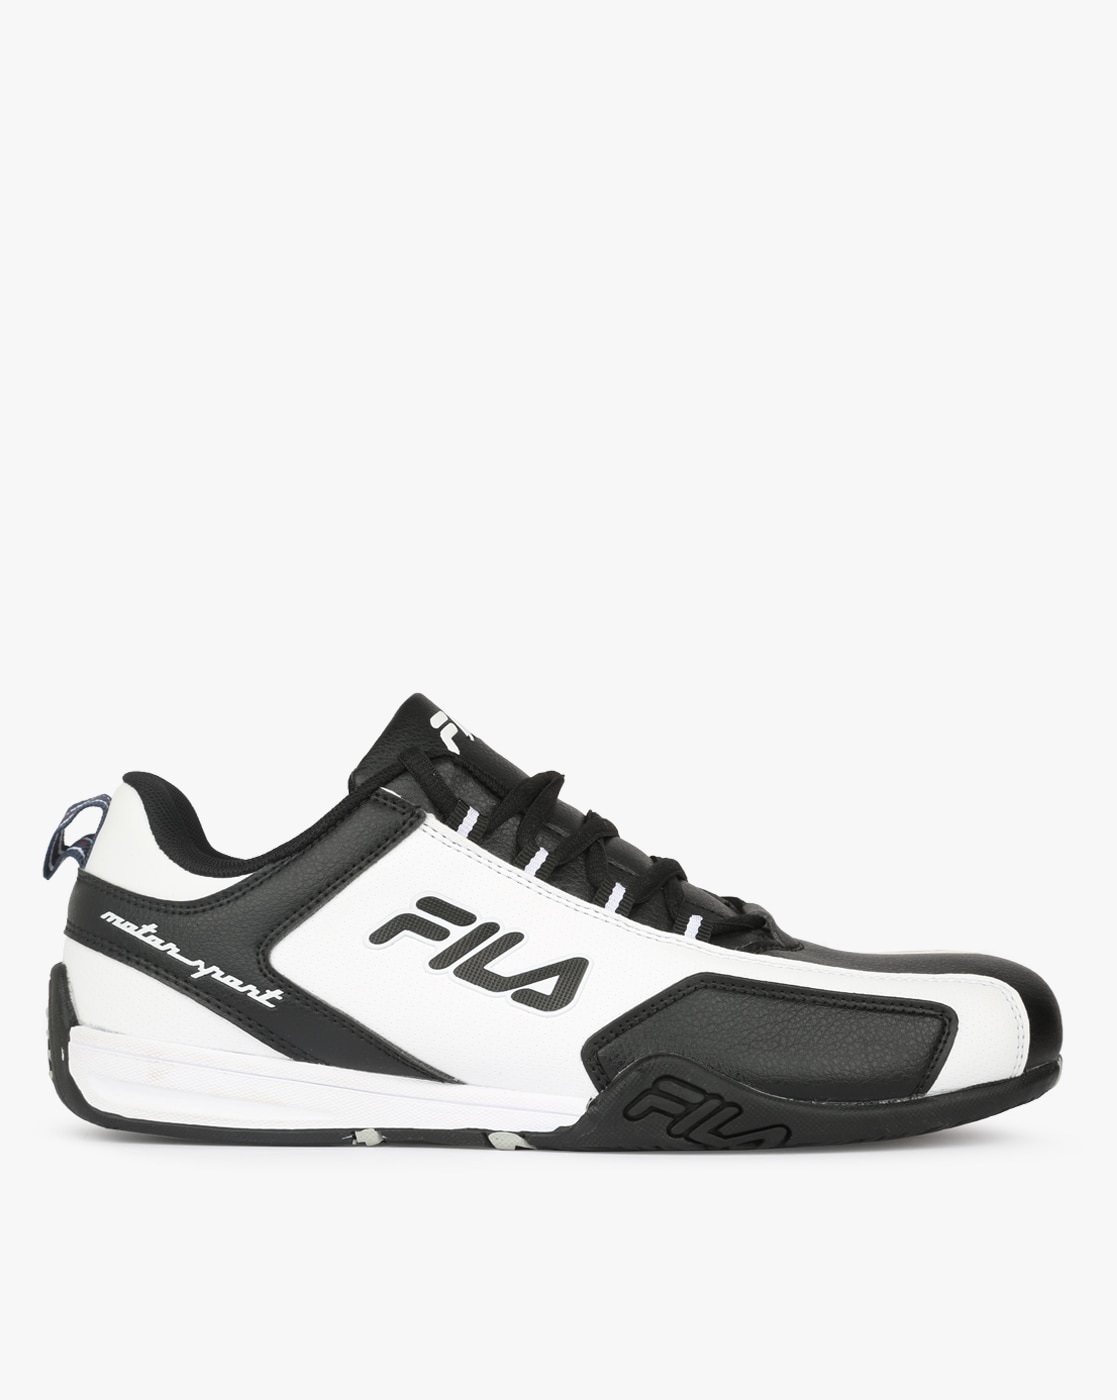 fila black sports shoes